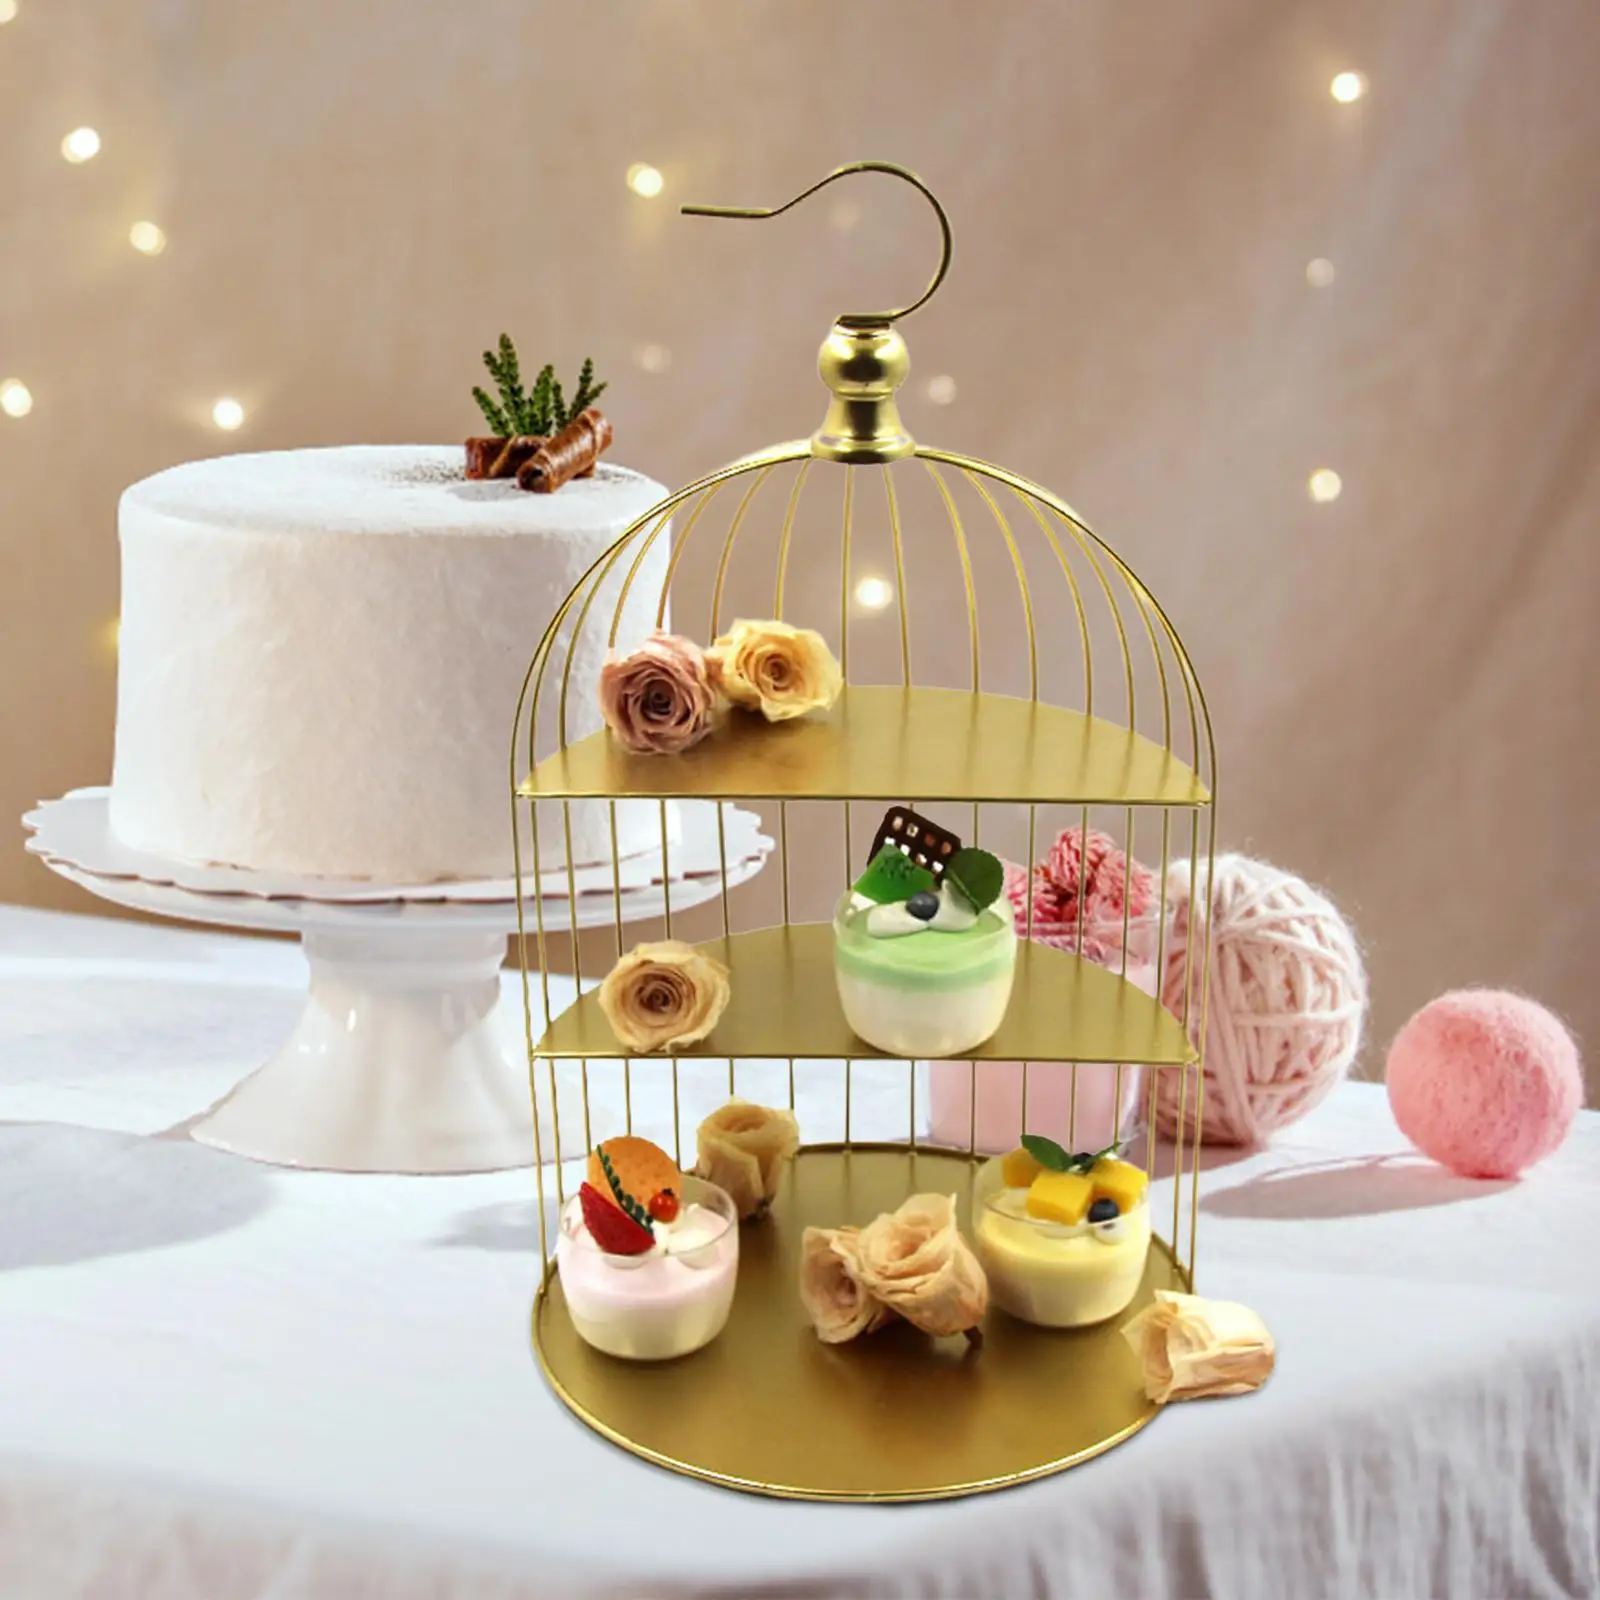 Birdcage Cake Stand Cosmetic Iron 3 Tier Art Desktop Make up Bird Cage Food Container Holder Countertop Iron Cake Display Basket